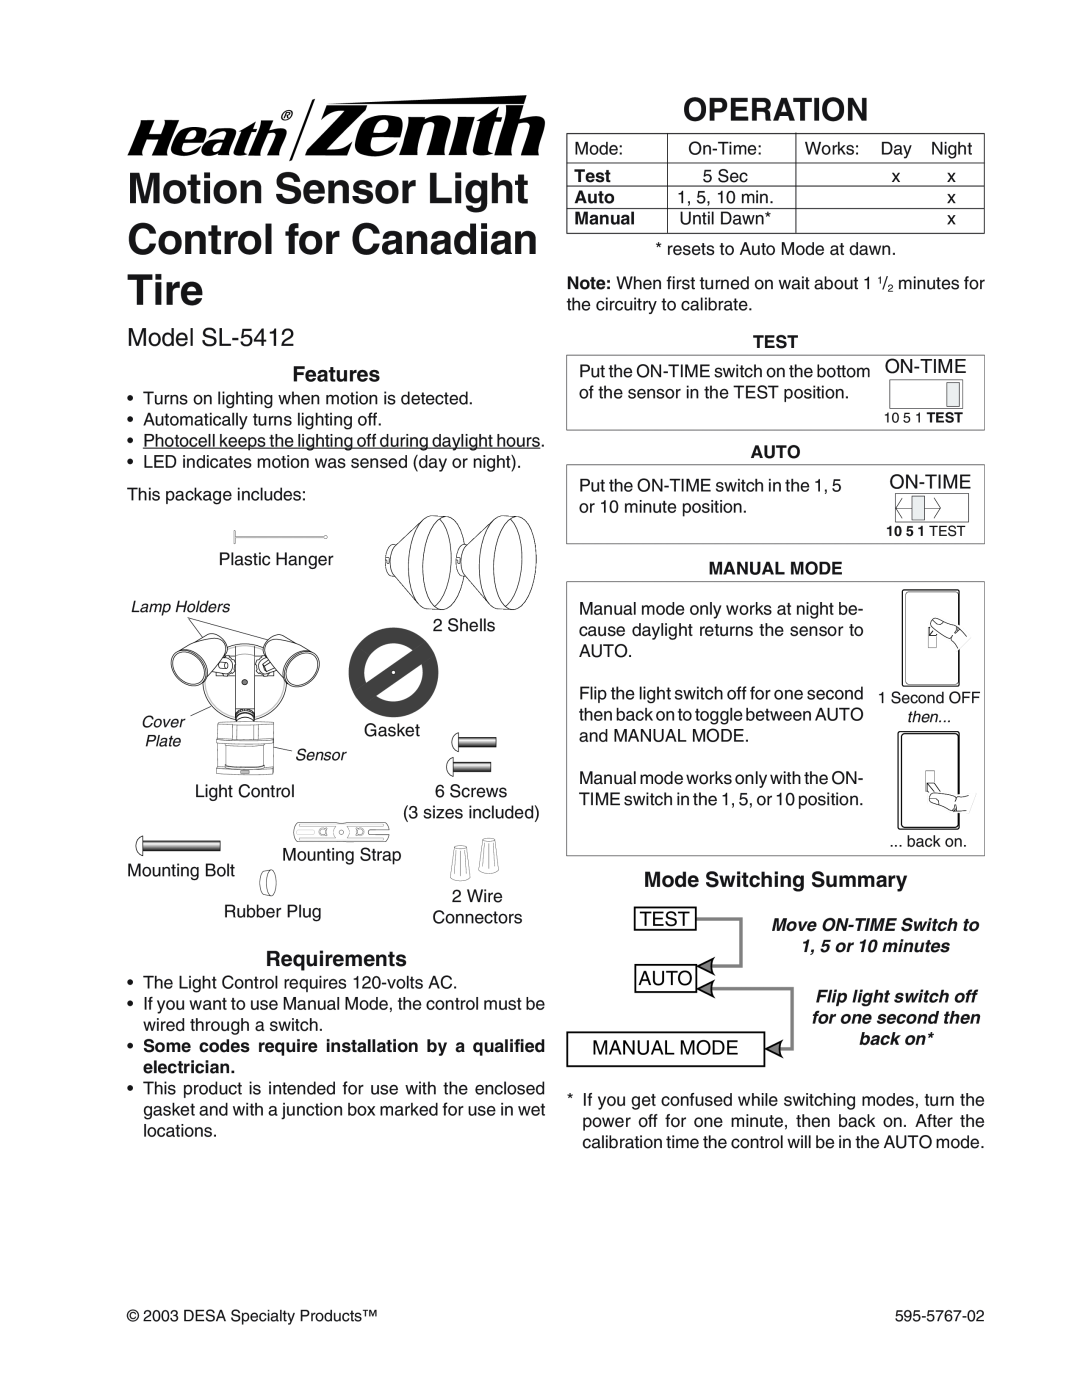 Heath Zenith manual Operation, Model SL-5412, Motion Sensor Light Control, Mode Switching Summary, Test, Auto, Manual 